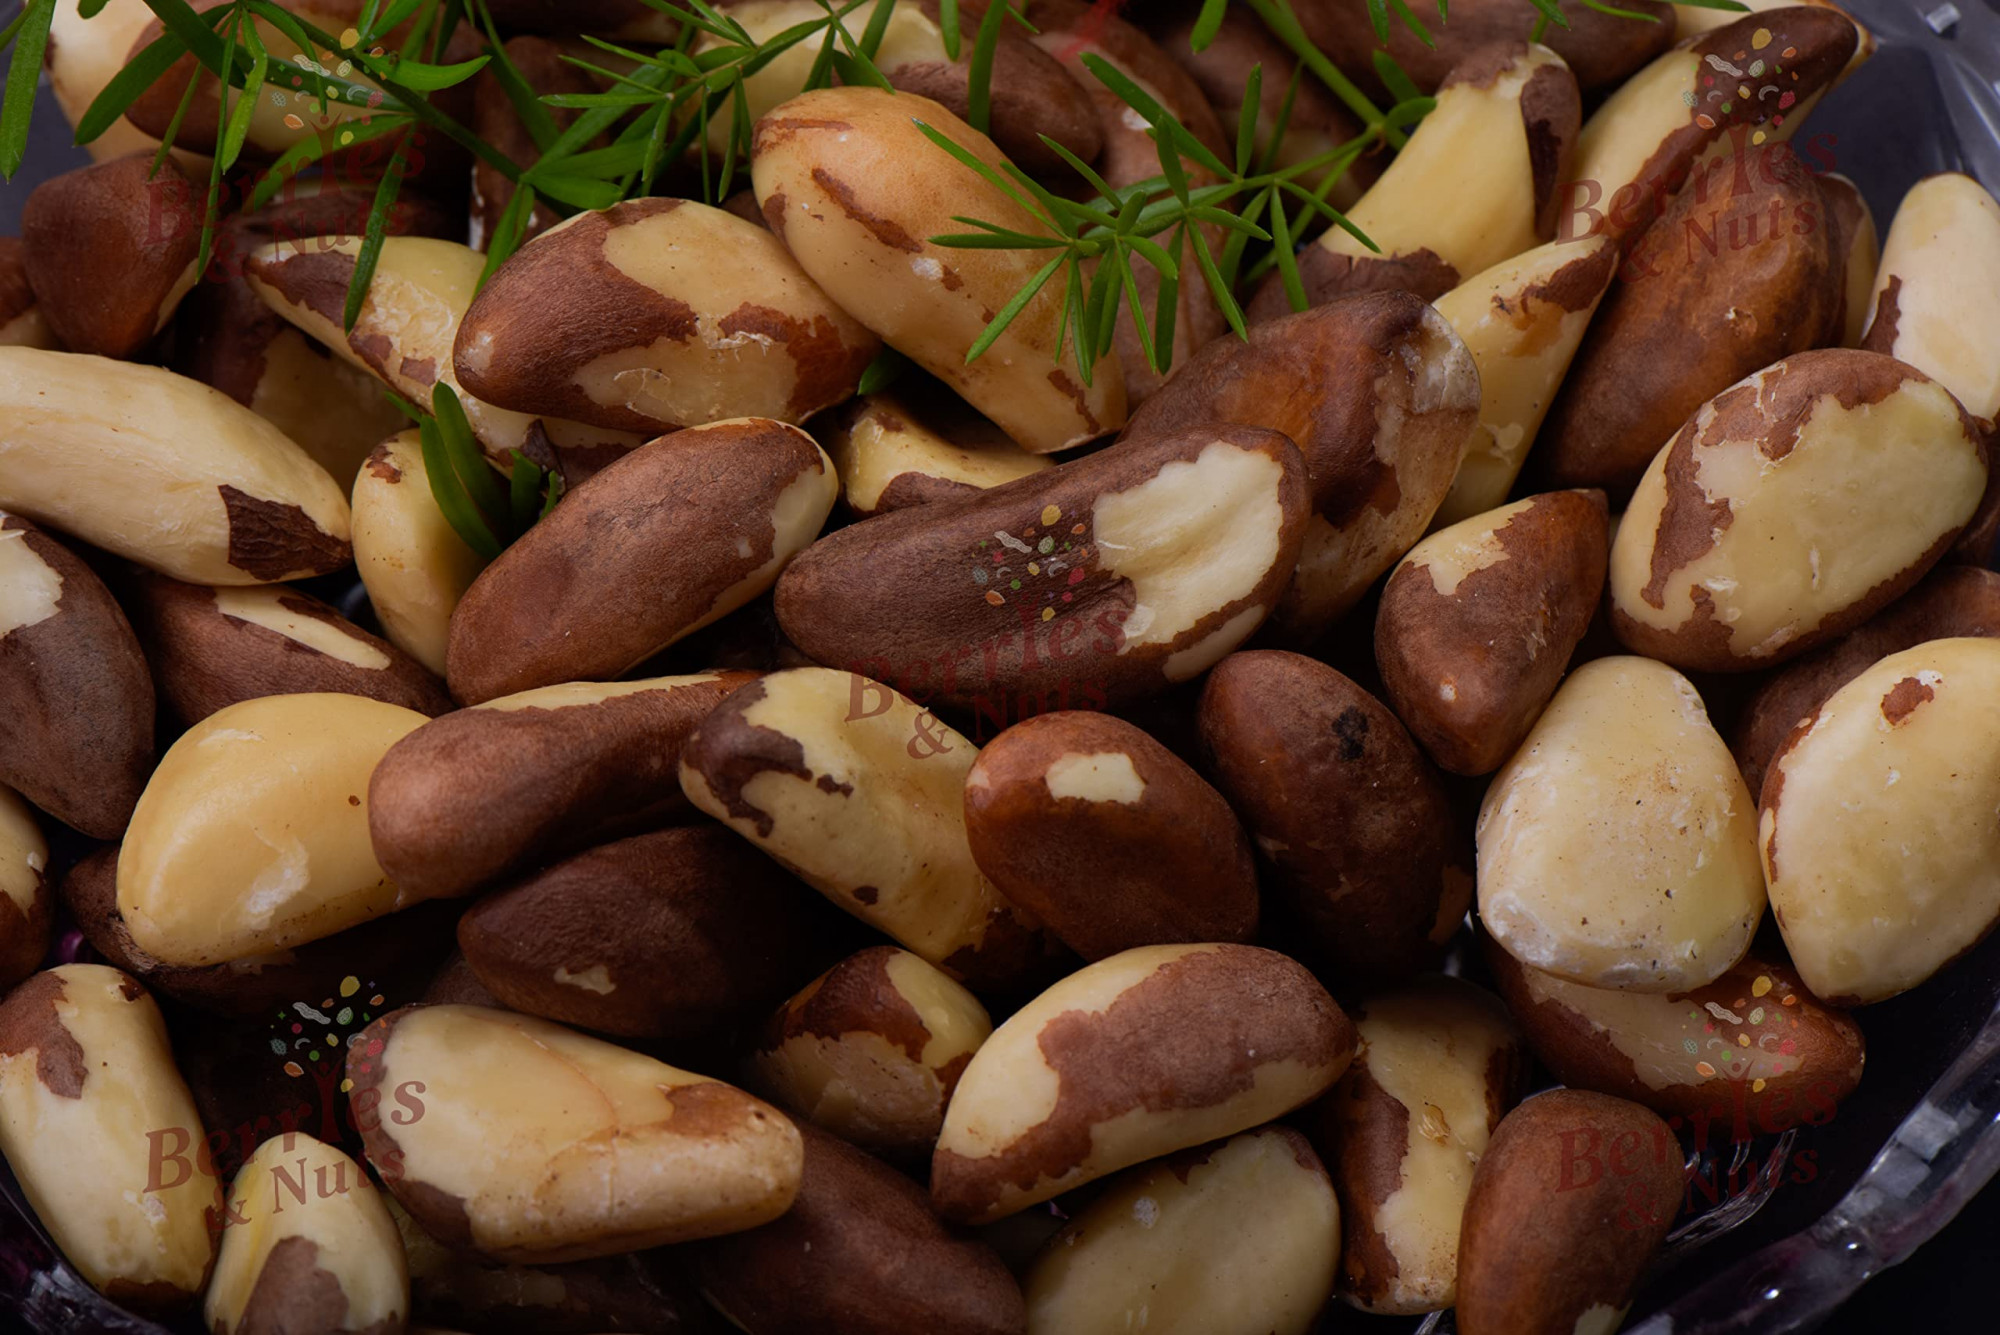 Berries And Nuts Premium Jumbo Brazil Nuts 250 Grams | Rich Source of Selenium, Antioxidant Rich Super Food